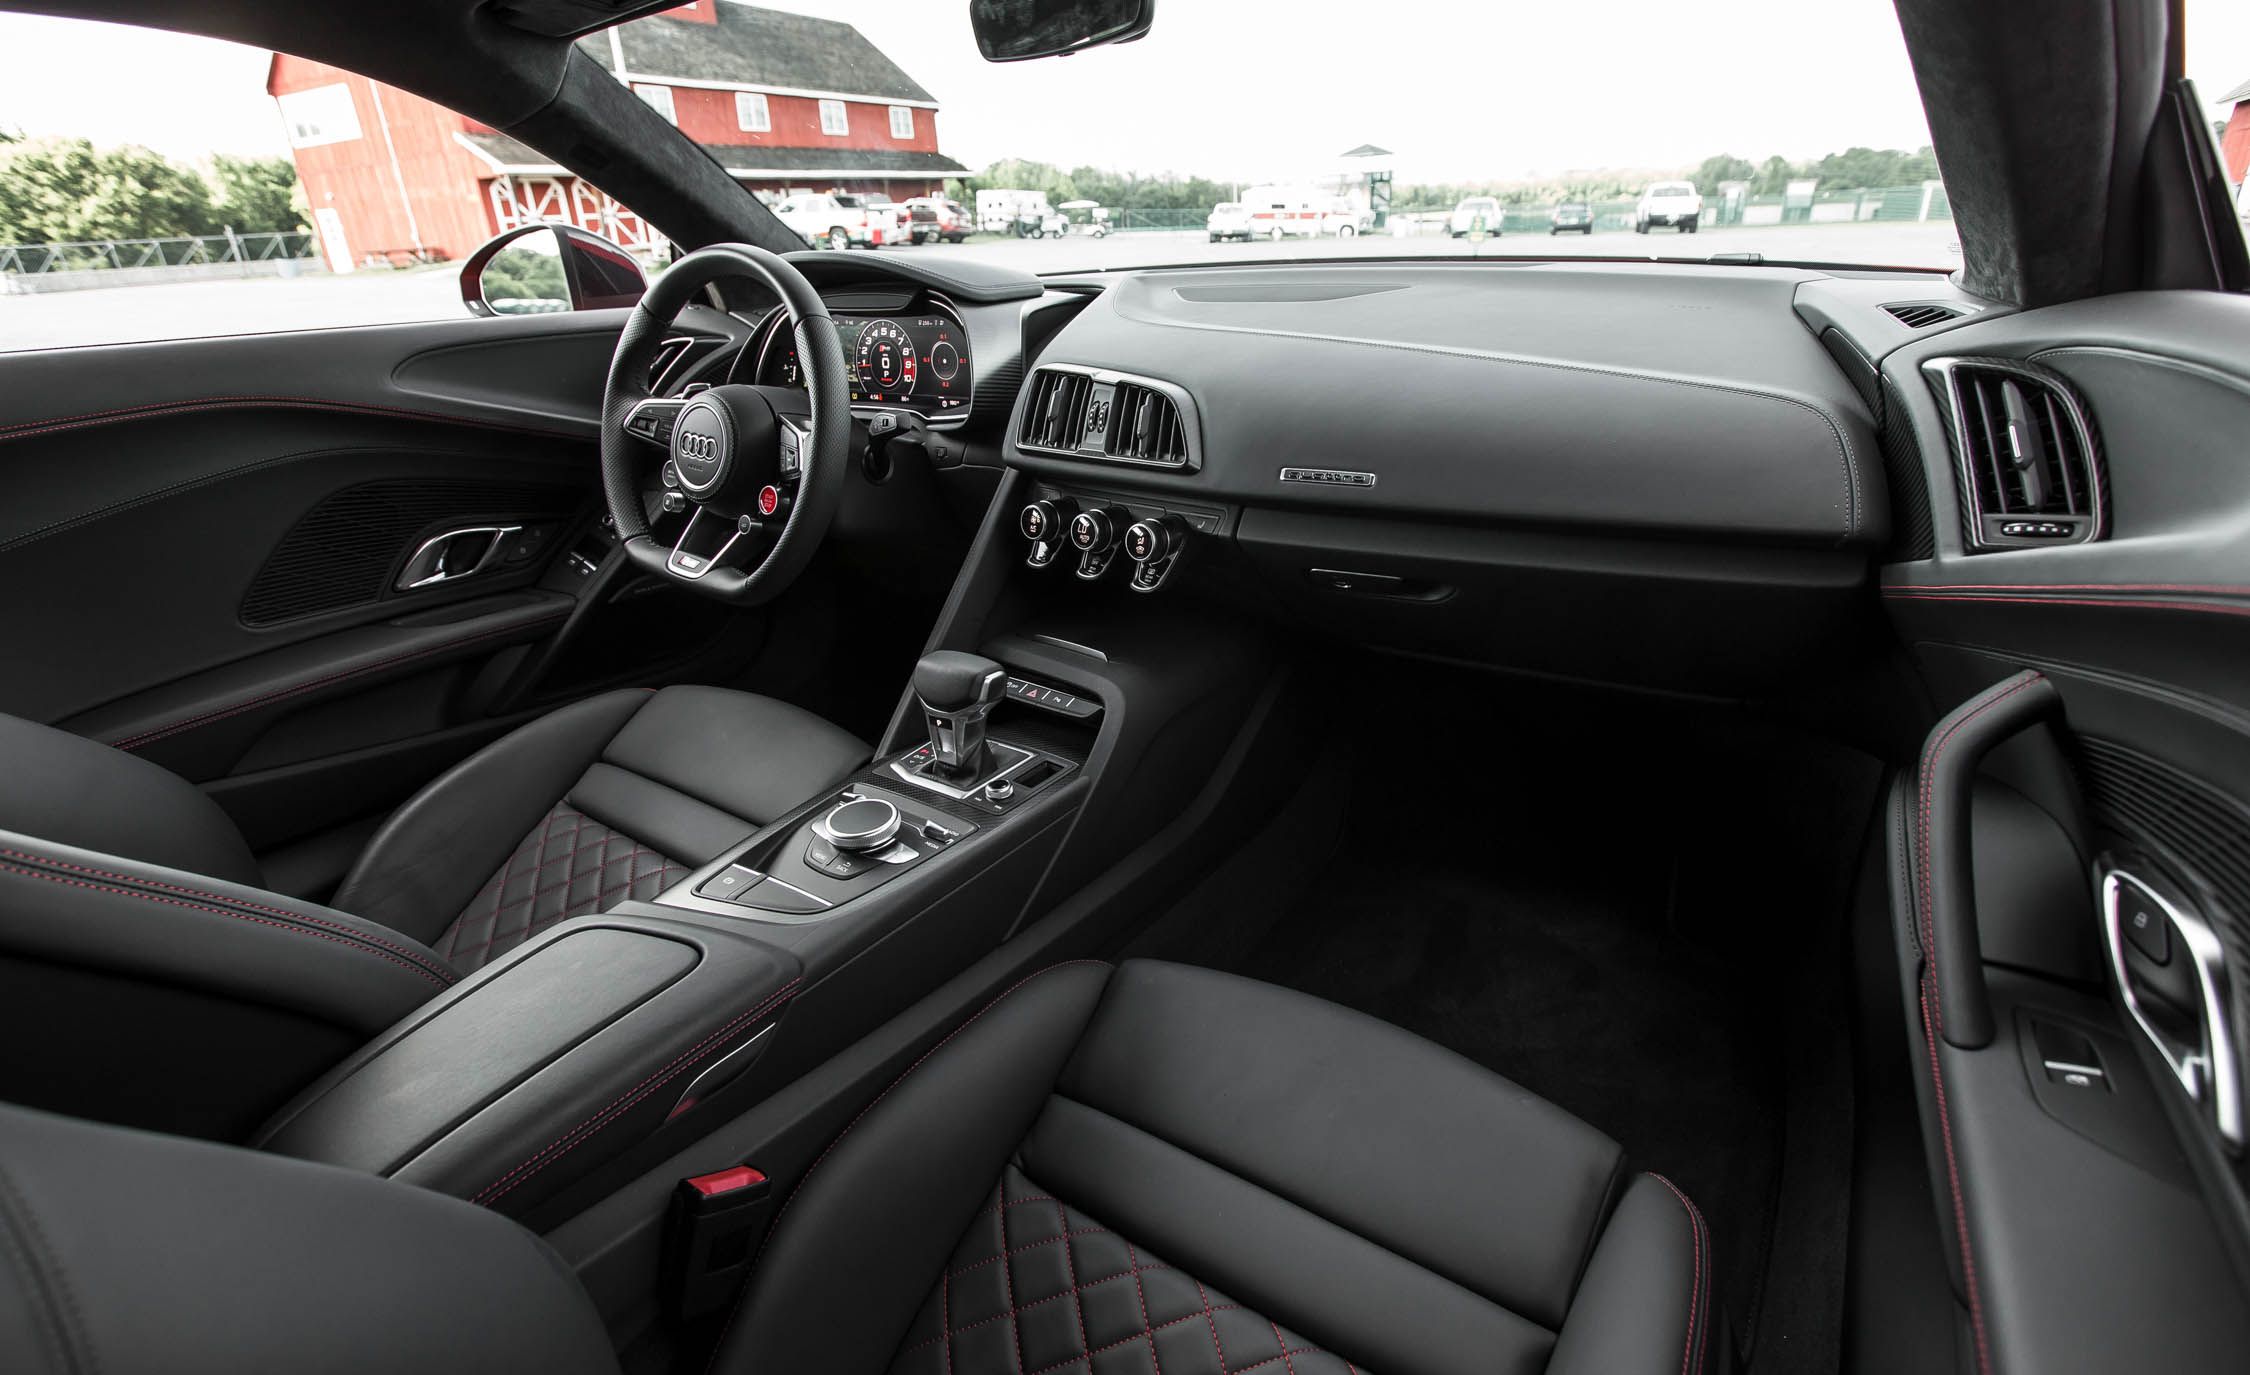 2017 Audi R8 V 10 Plus (View 10 of 19)